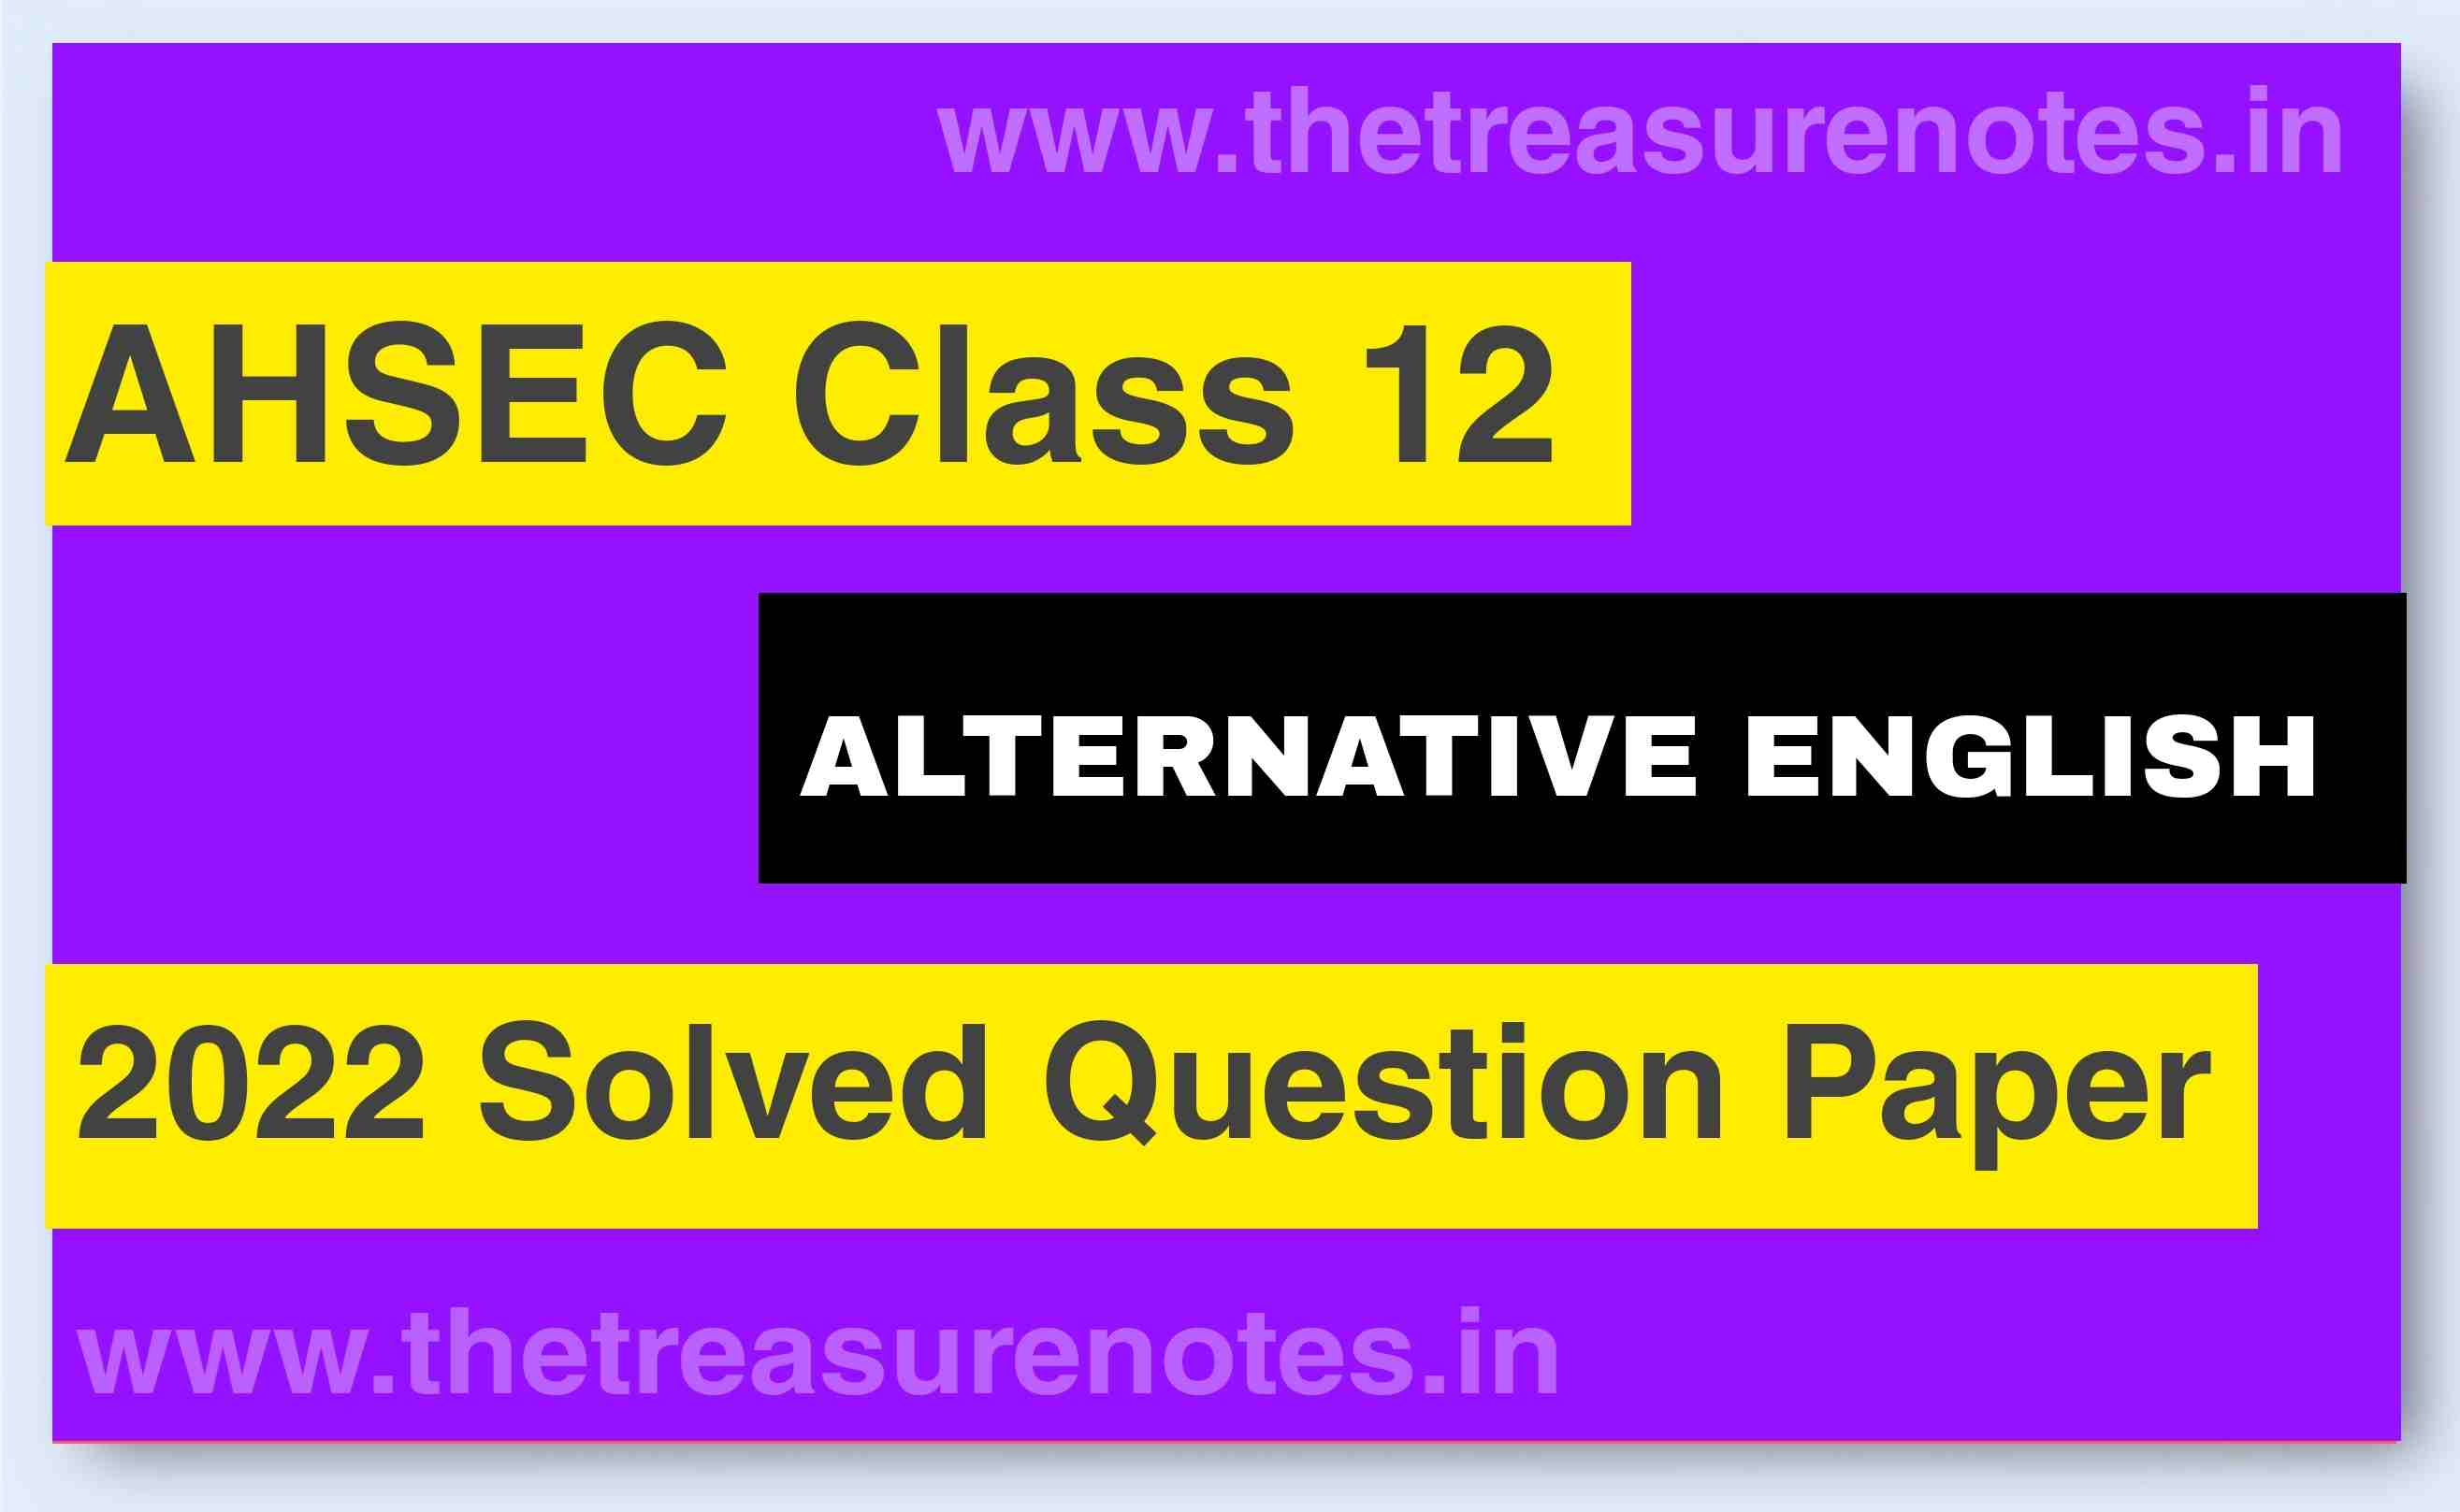 AHSEC Class 12 Alternative English Solved Question Paper 2022 | HS 2nd Year Alternative English Solved Paper 2022